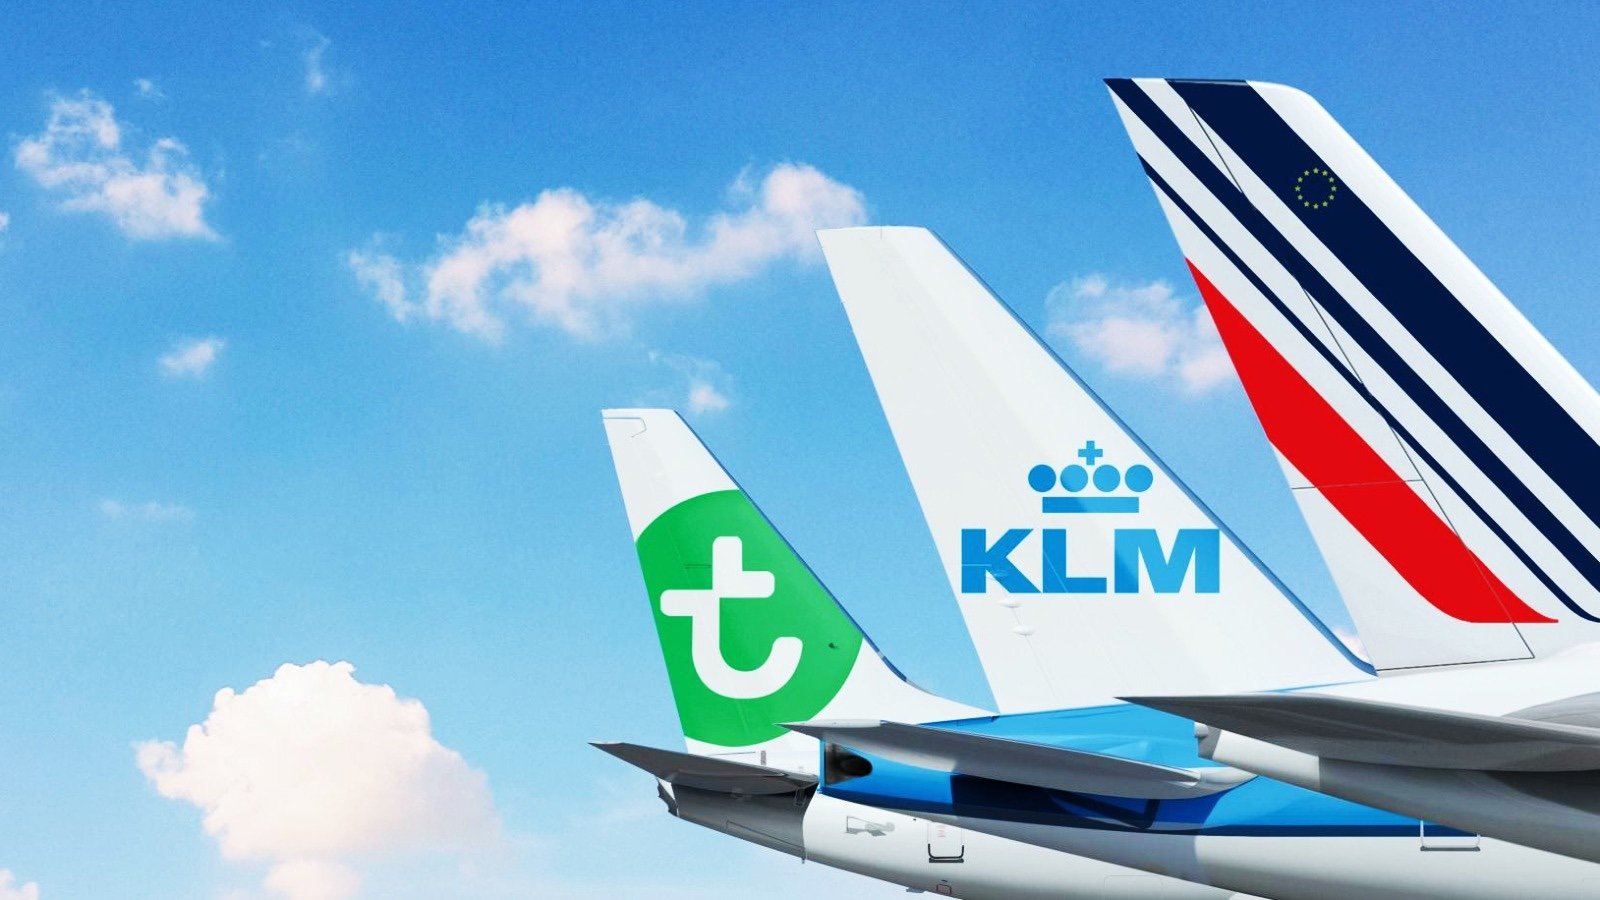 Air France–KLM